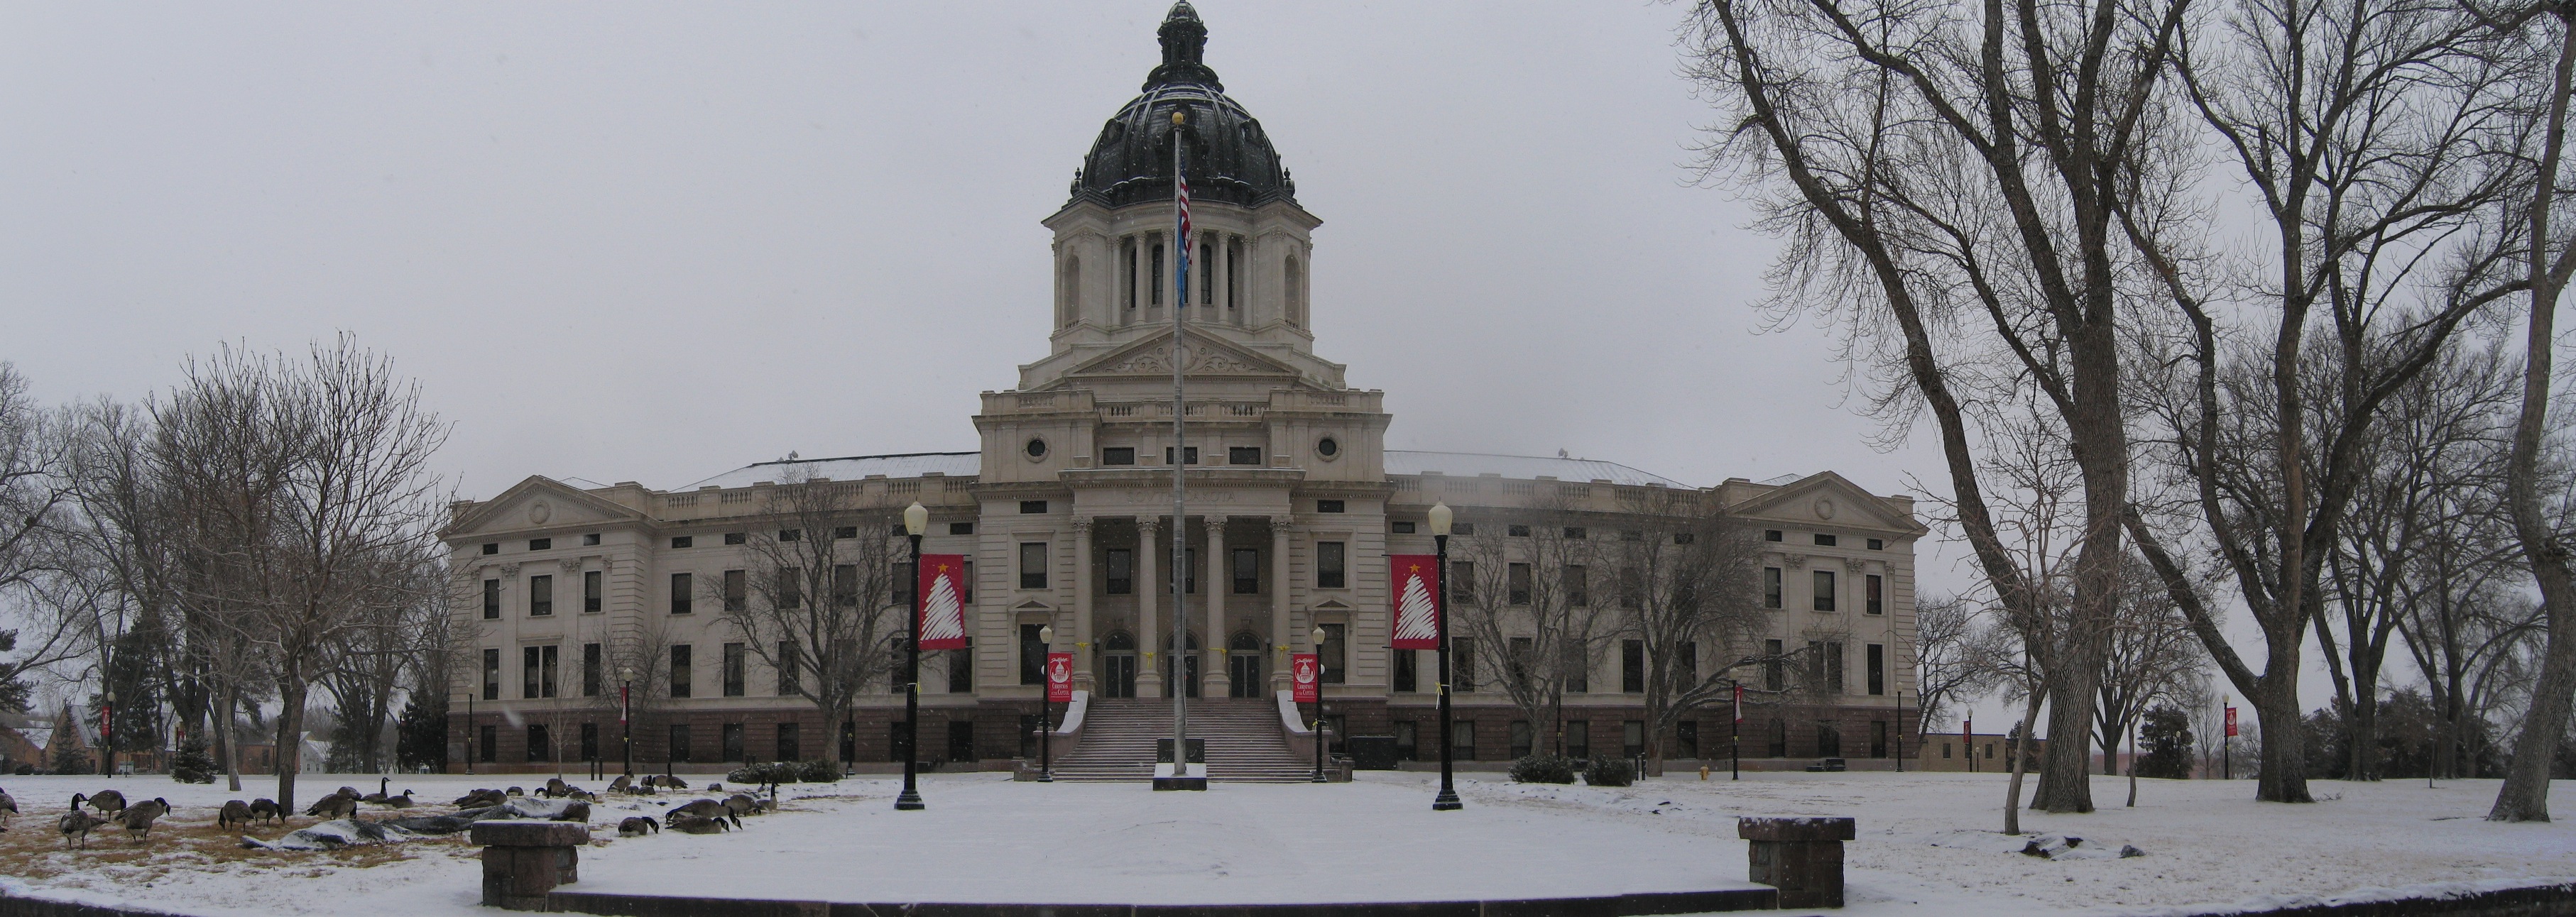 South_Dakota_Capitol_in_winter